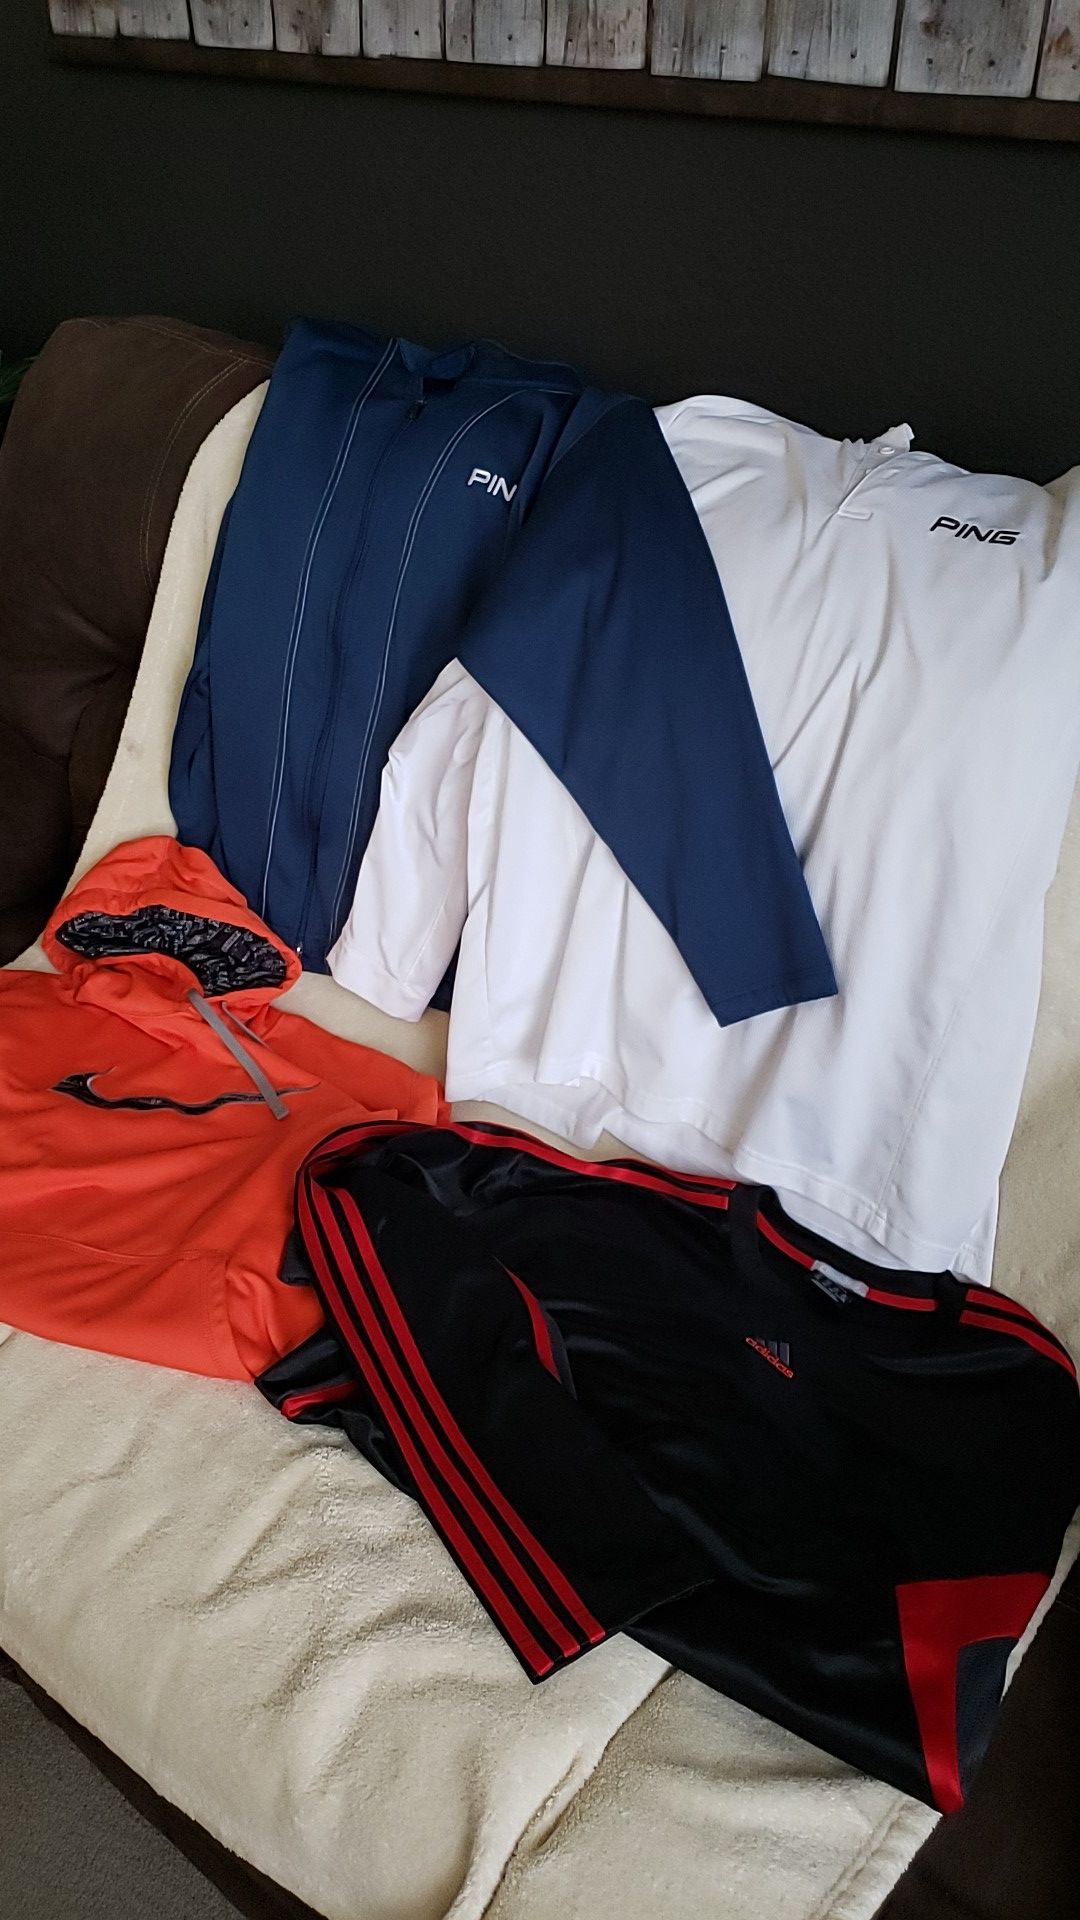 Nike, PING, and Adidas 2XL shirts,jackets and hoodie